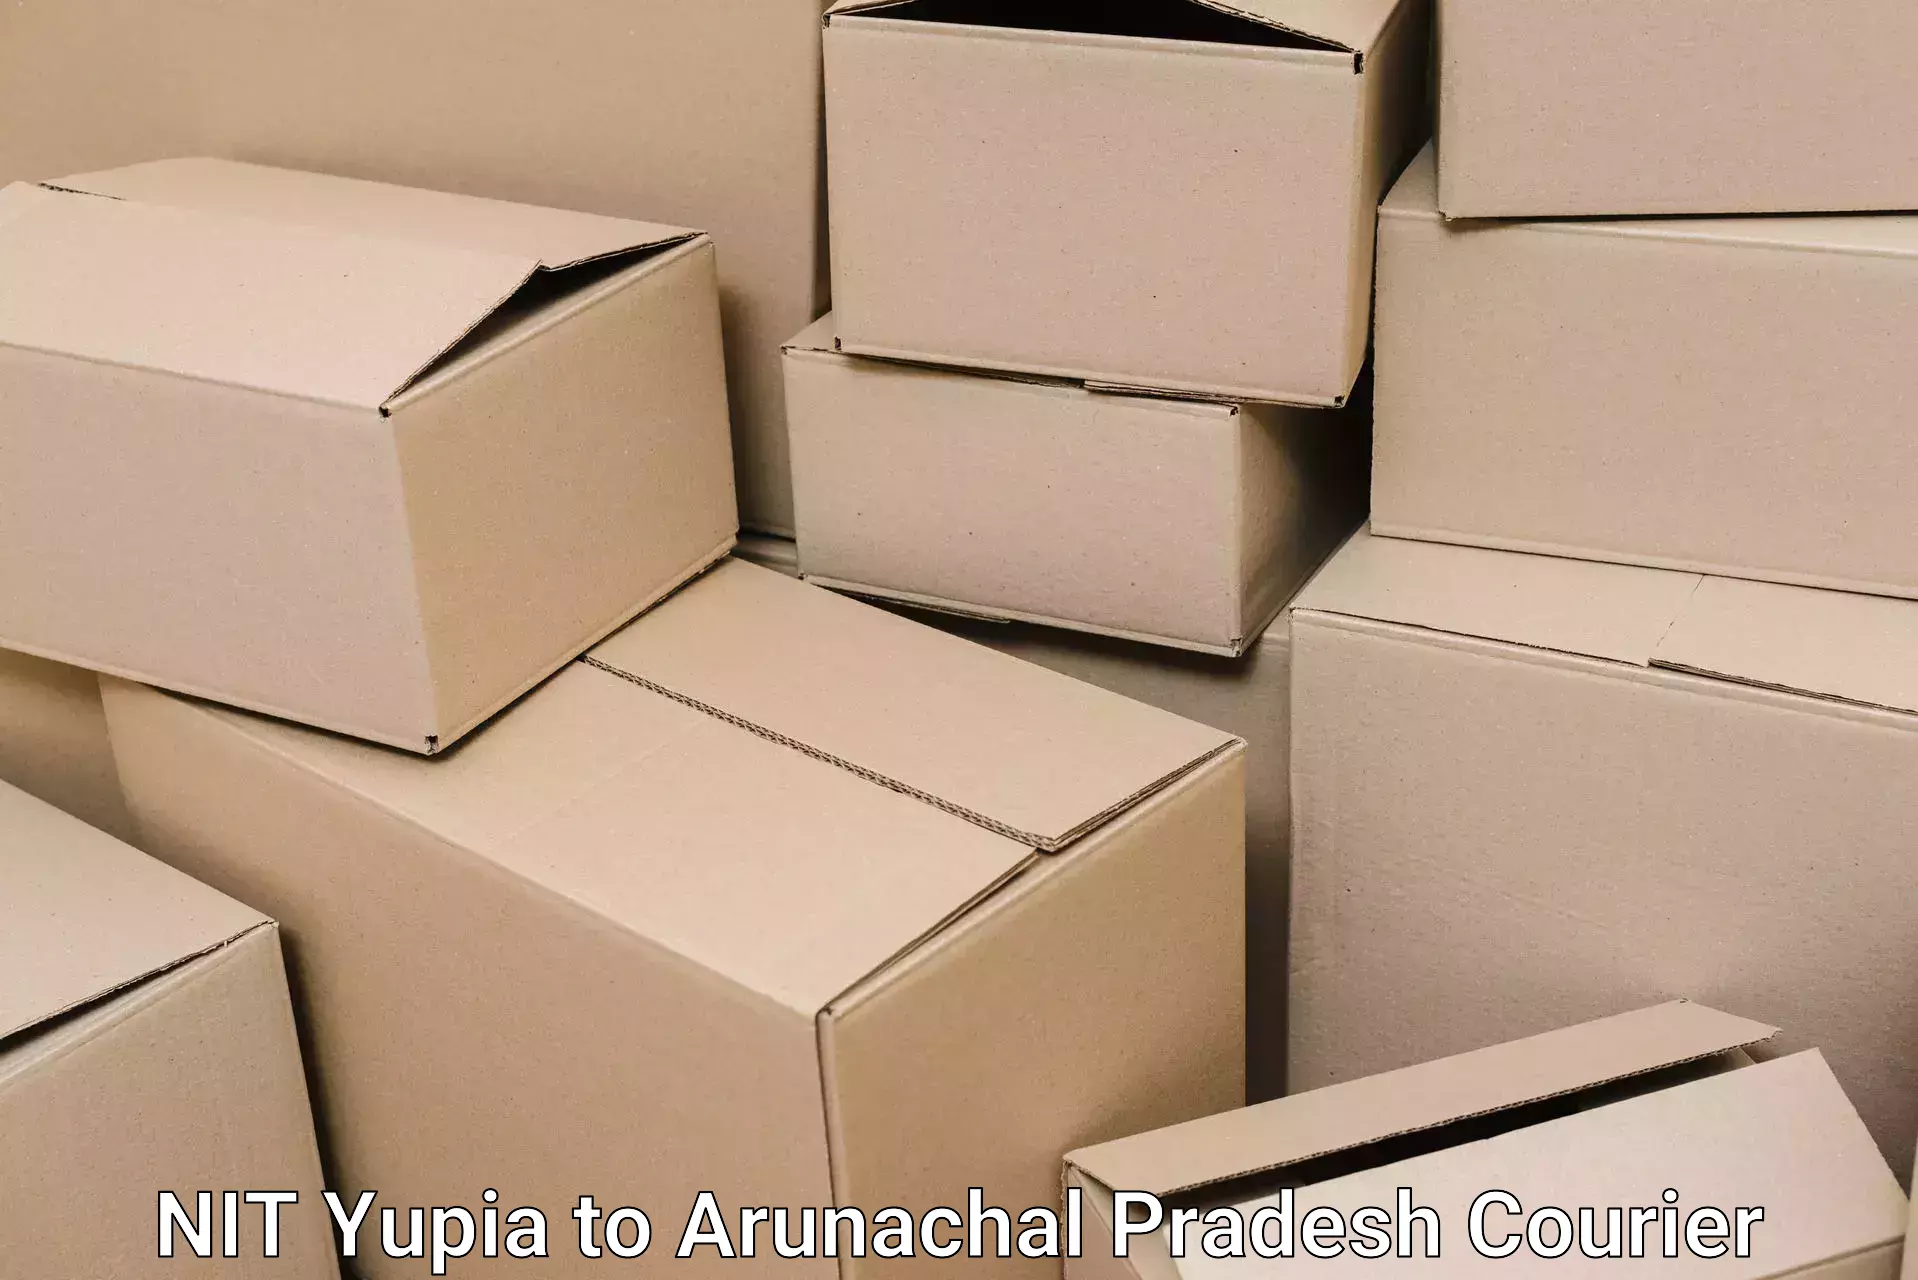 Professional moving assistance NIT Yupia to Arunachal Pradesh